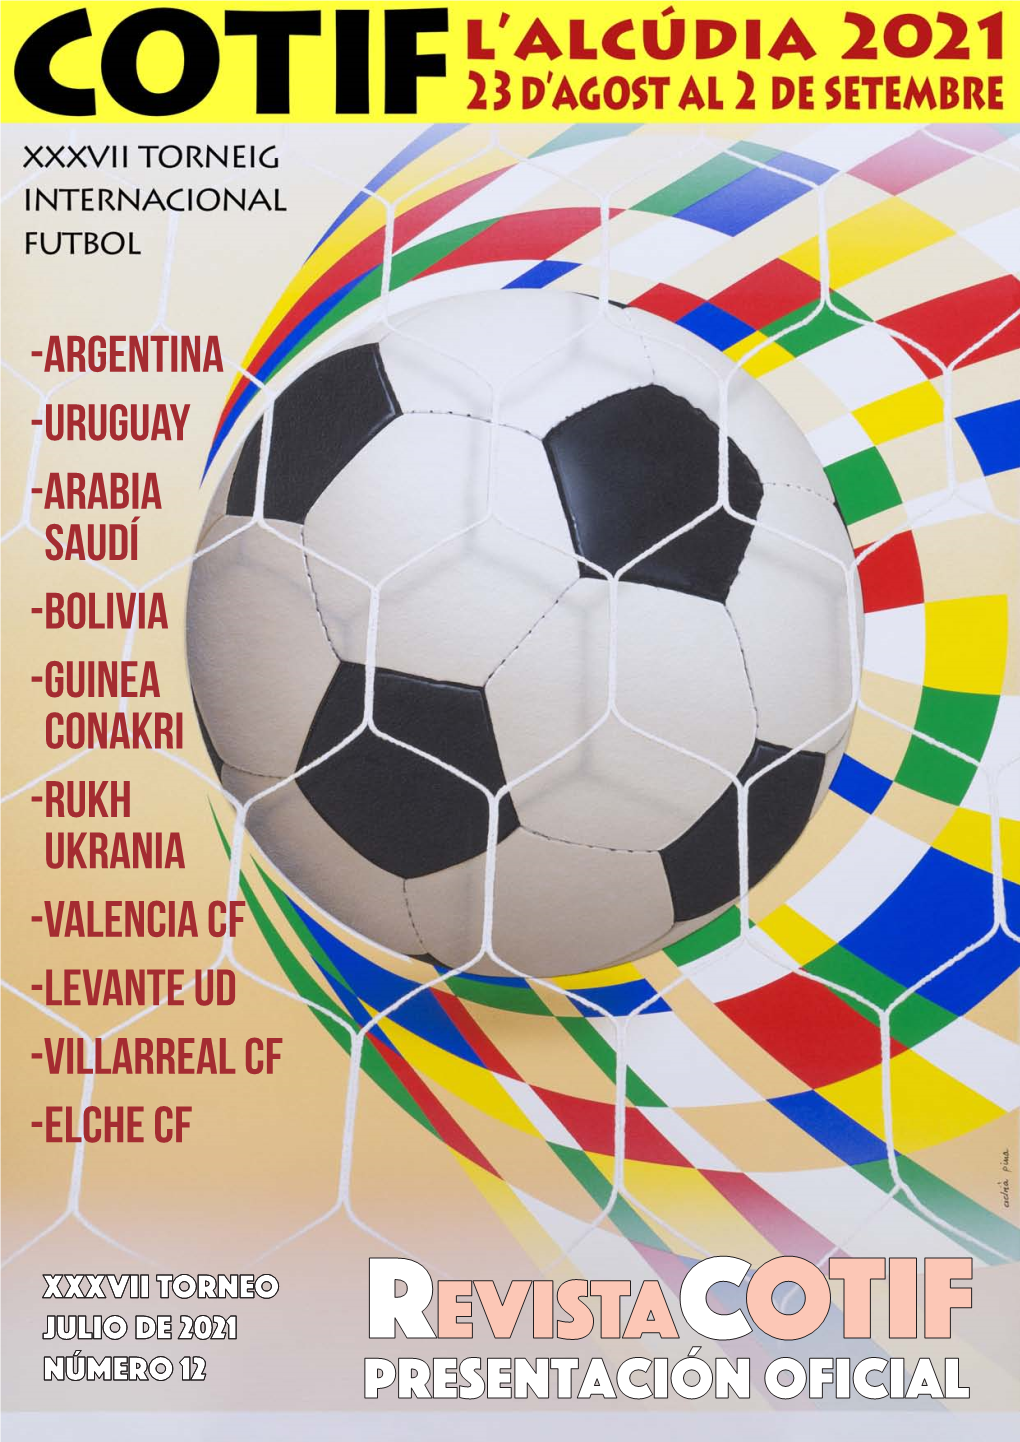 Bolivia -Guinea Conakri -Rukh Ukrania -Valencia Cf -Levante Ud